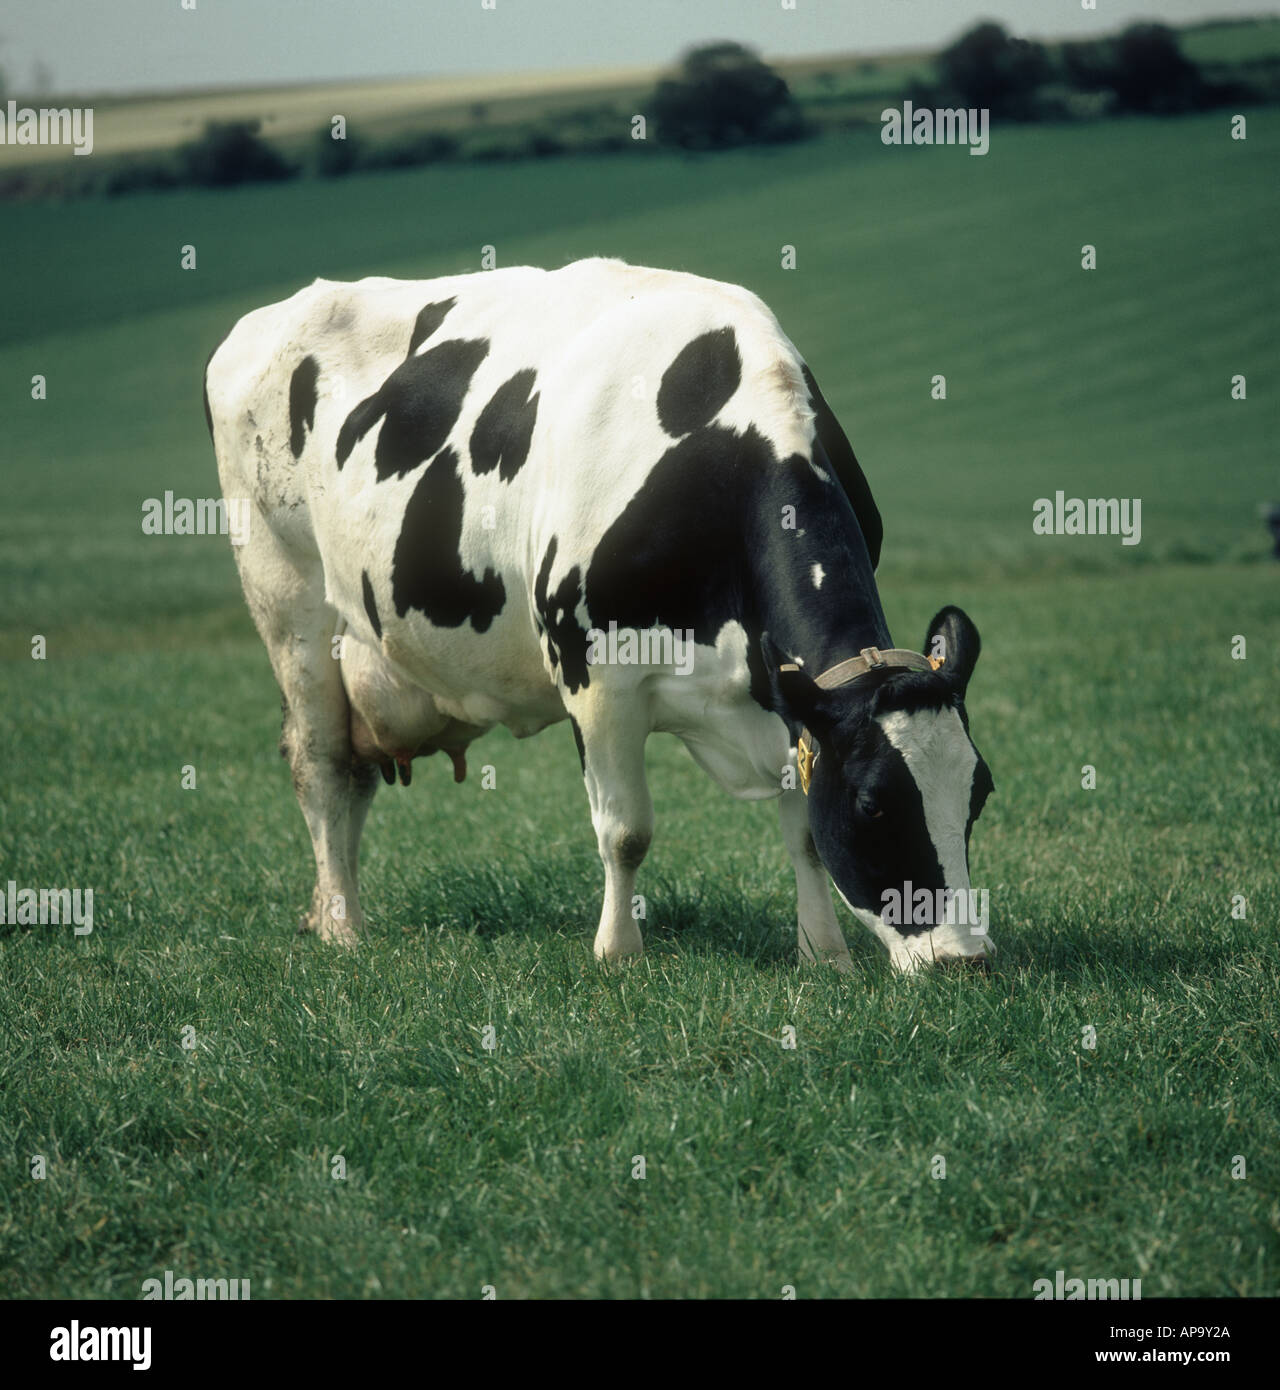 Holstein x Friesian dairy cow grazing on good spring grass Stock Photo